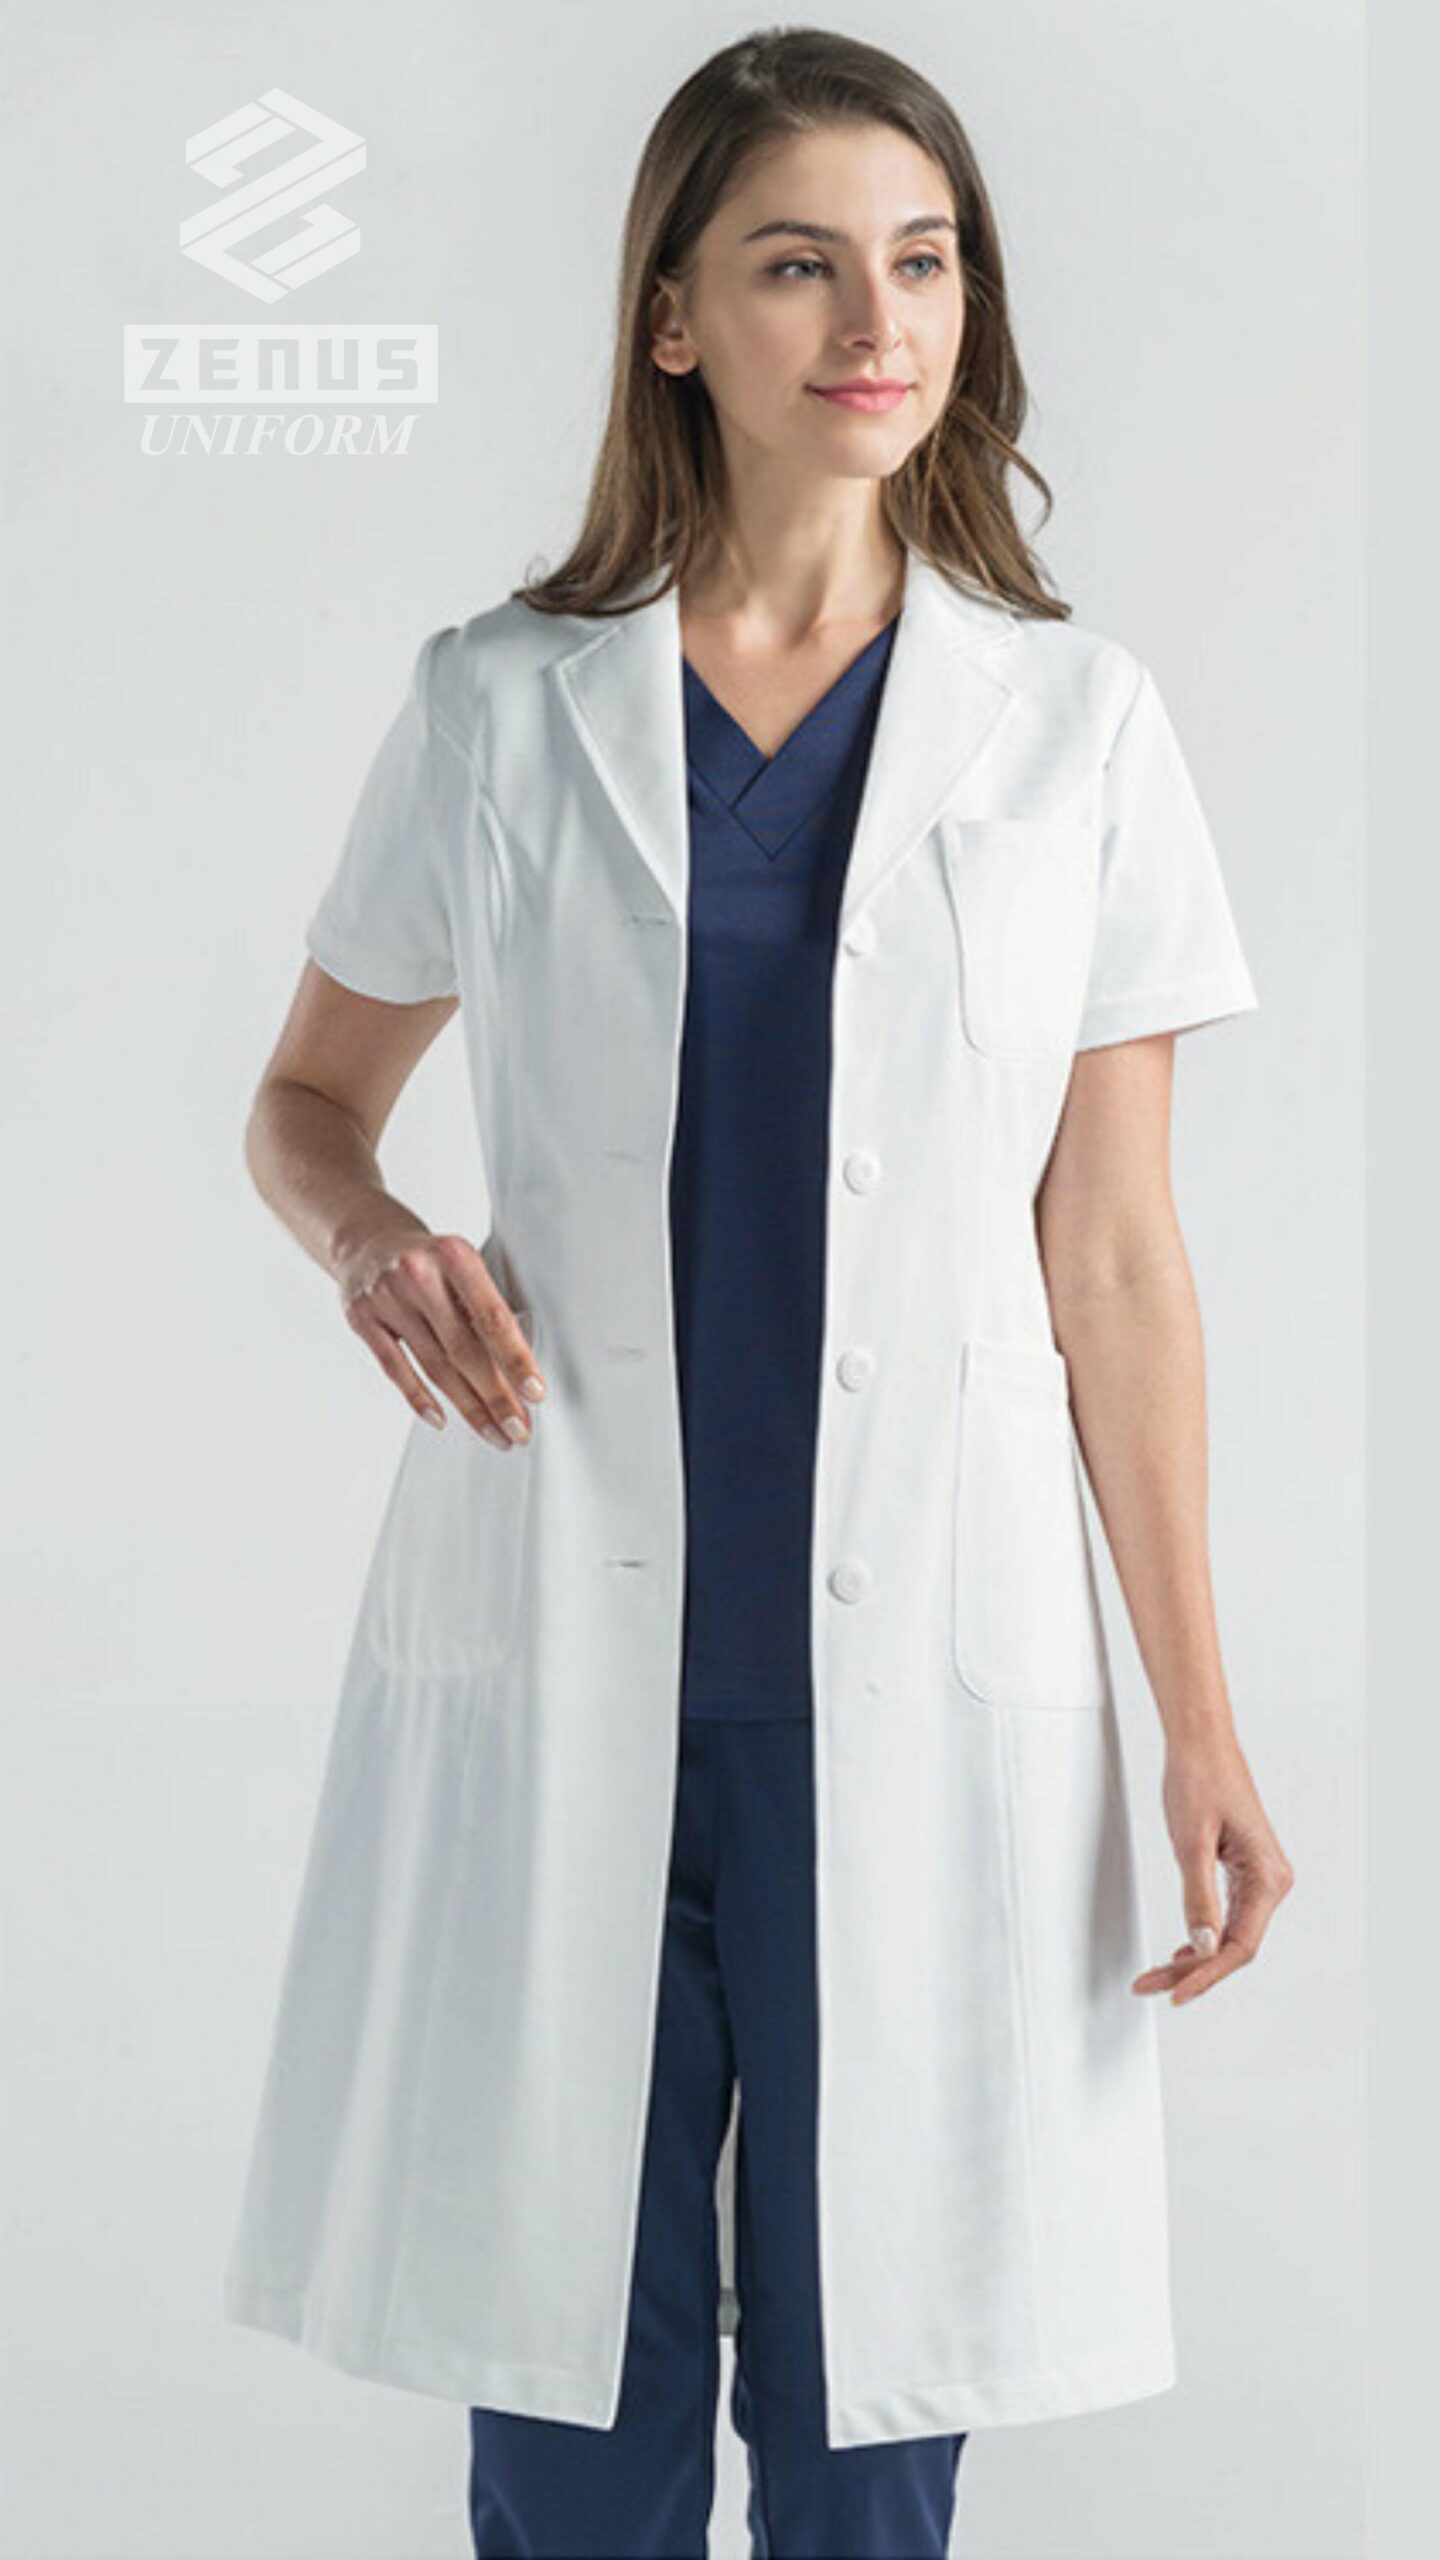 實驗室袍, 實驗袍, Lab Coat -pic01